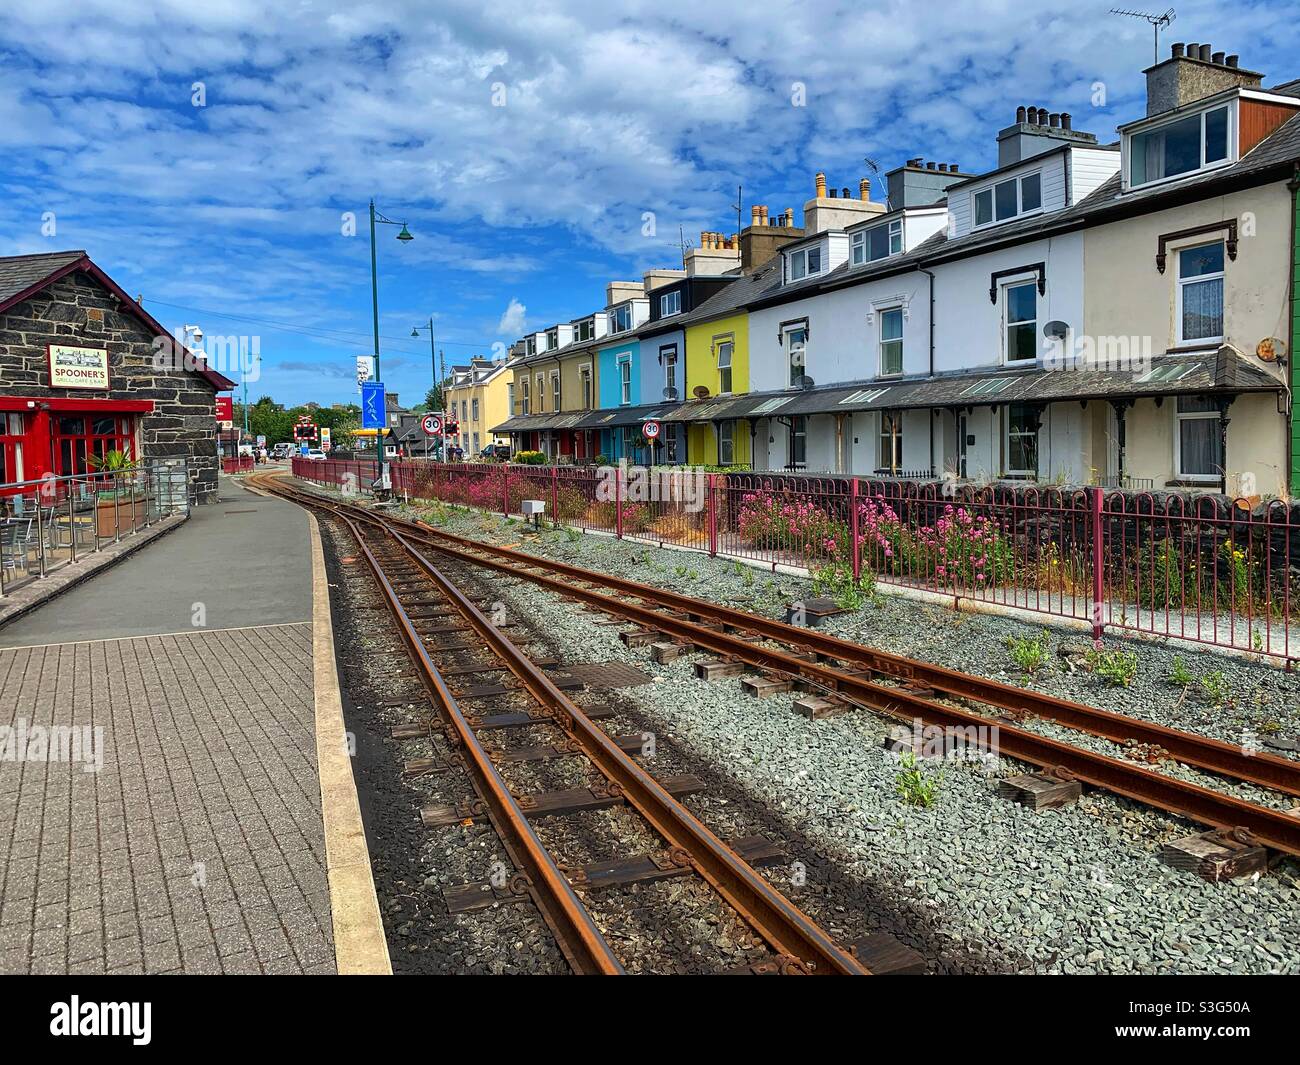 Porthmadog Steam Railway Station. Snowdonia, Wales. Stock Photo